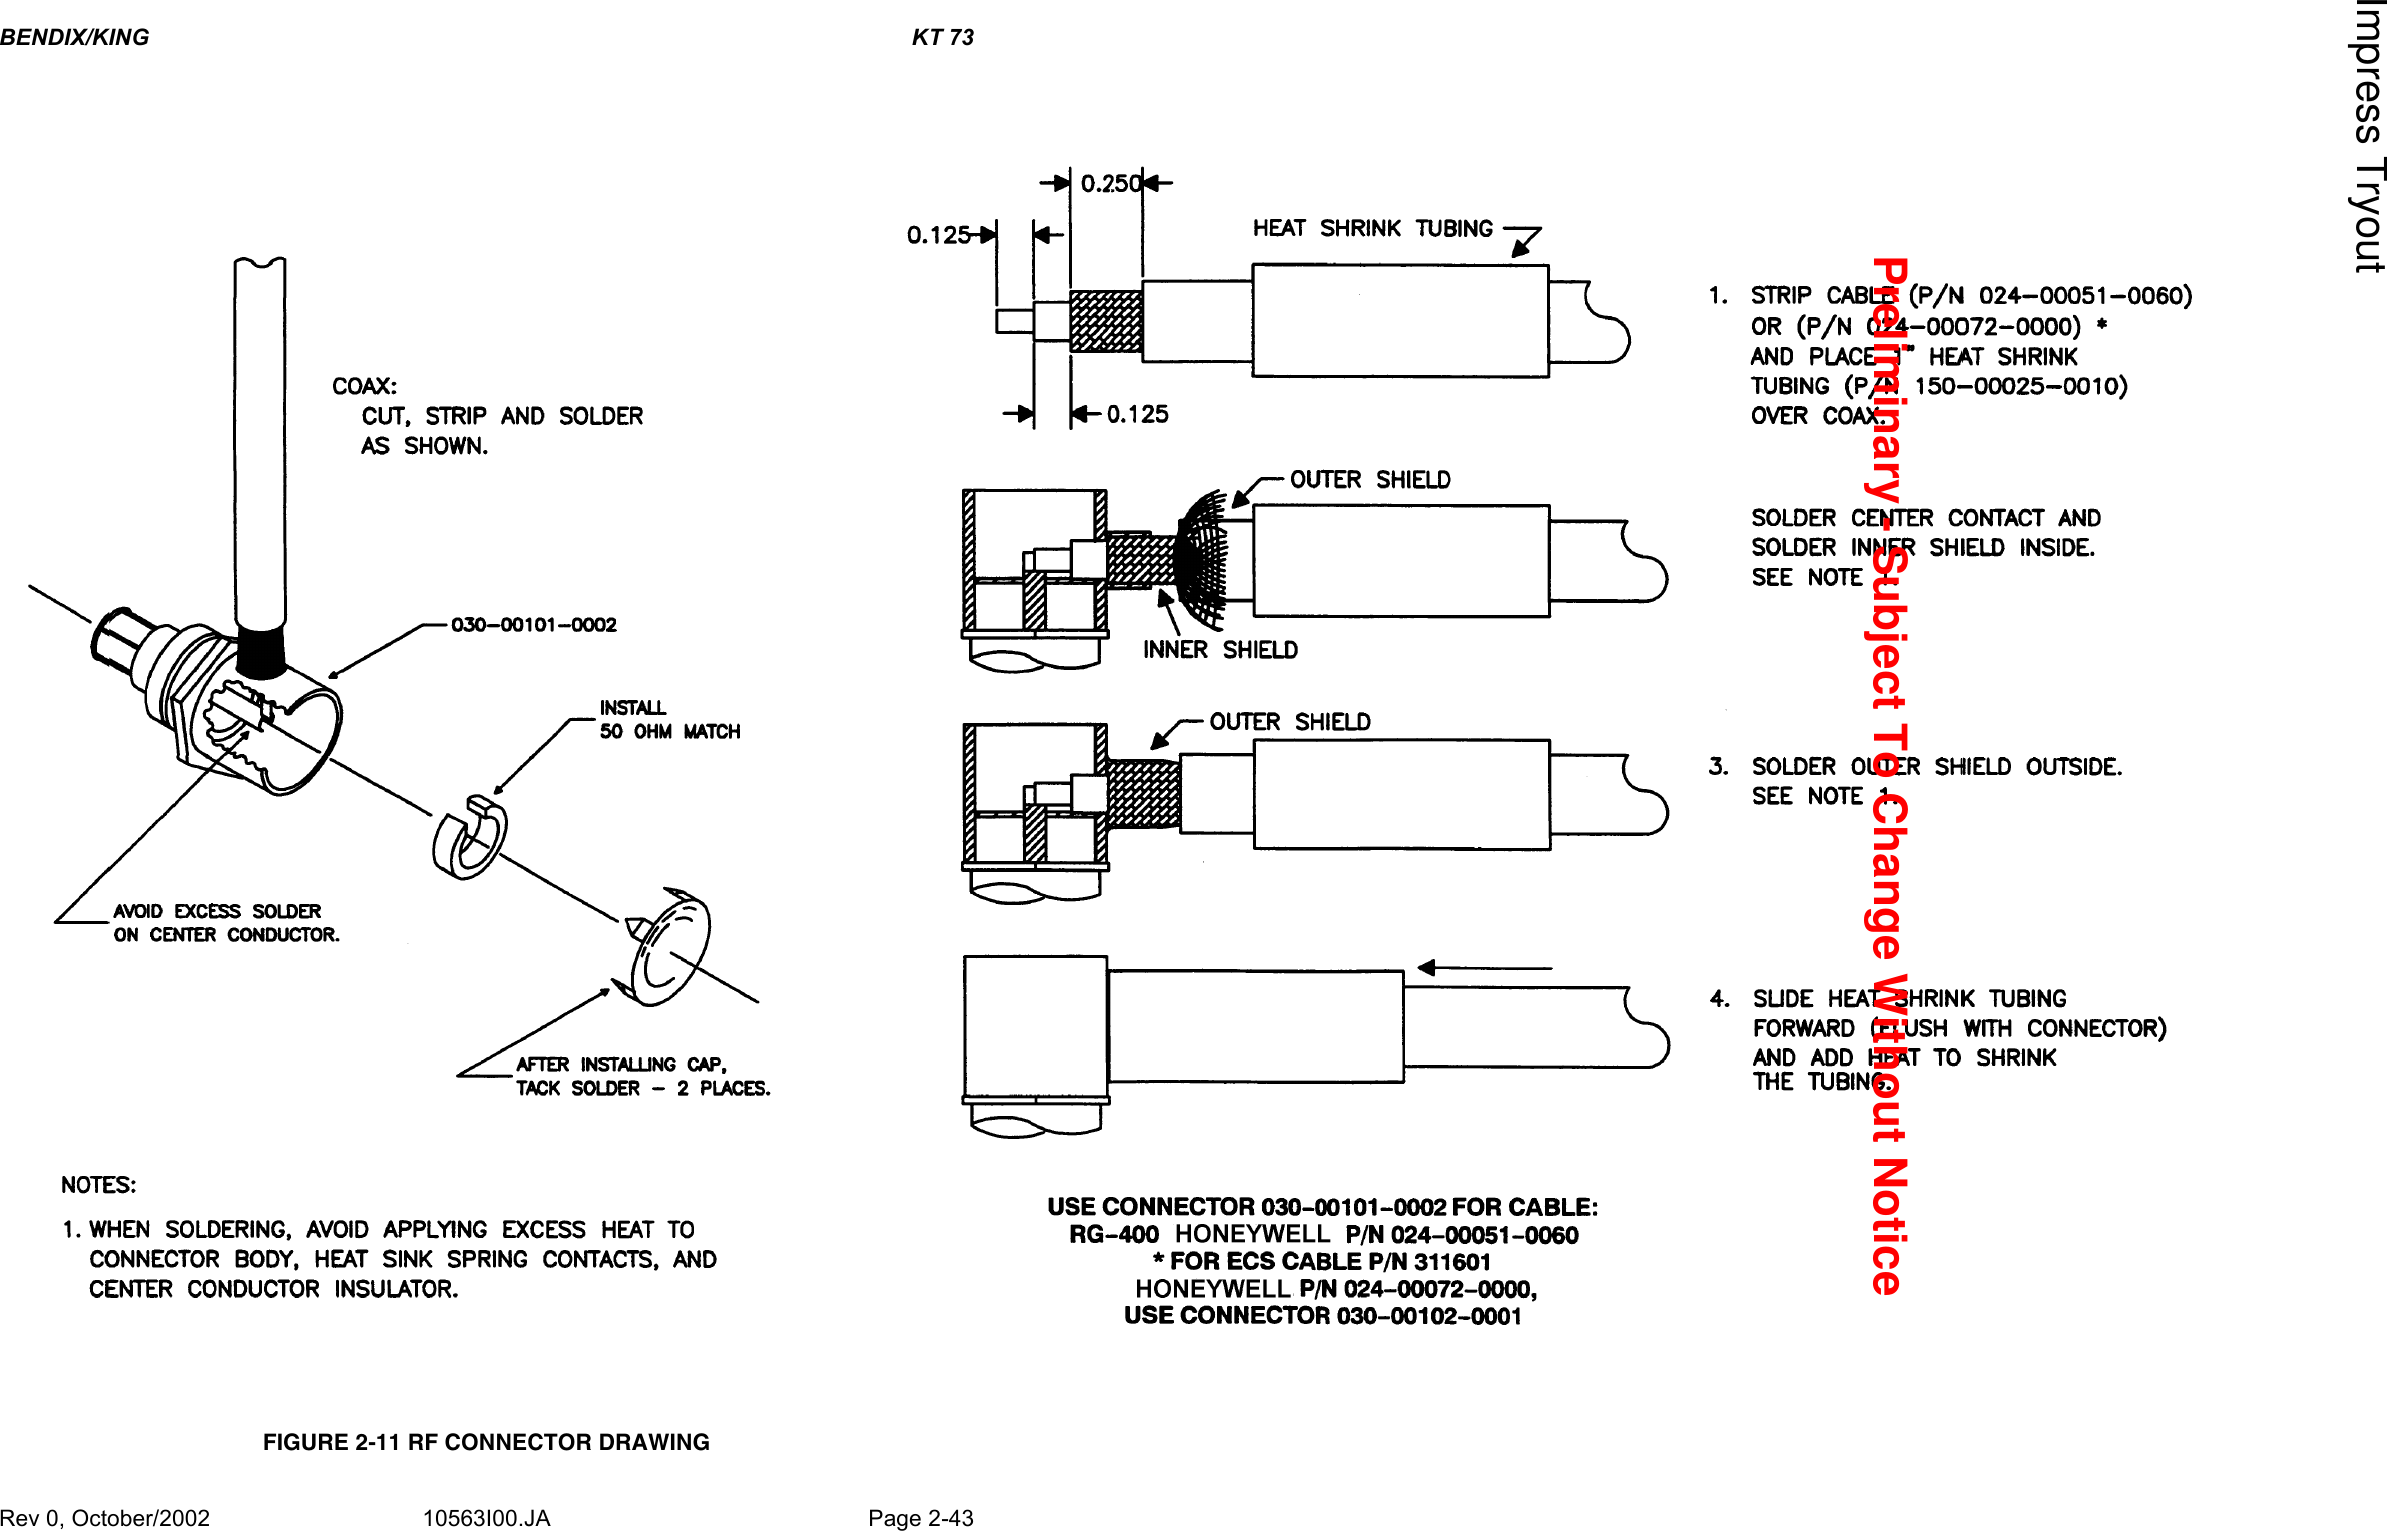 Page 59 of Honeywell KT73 Mode S Transponder, KT73 User Manual 73im